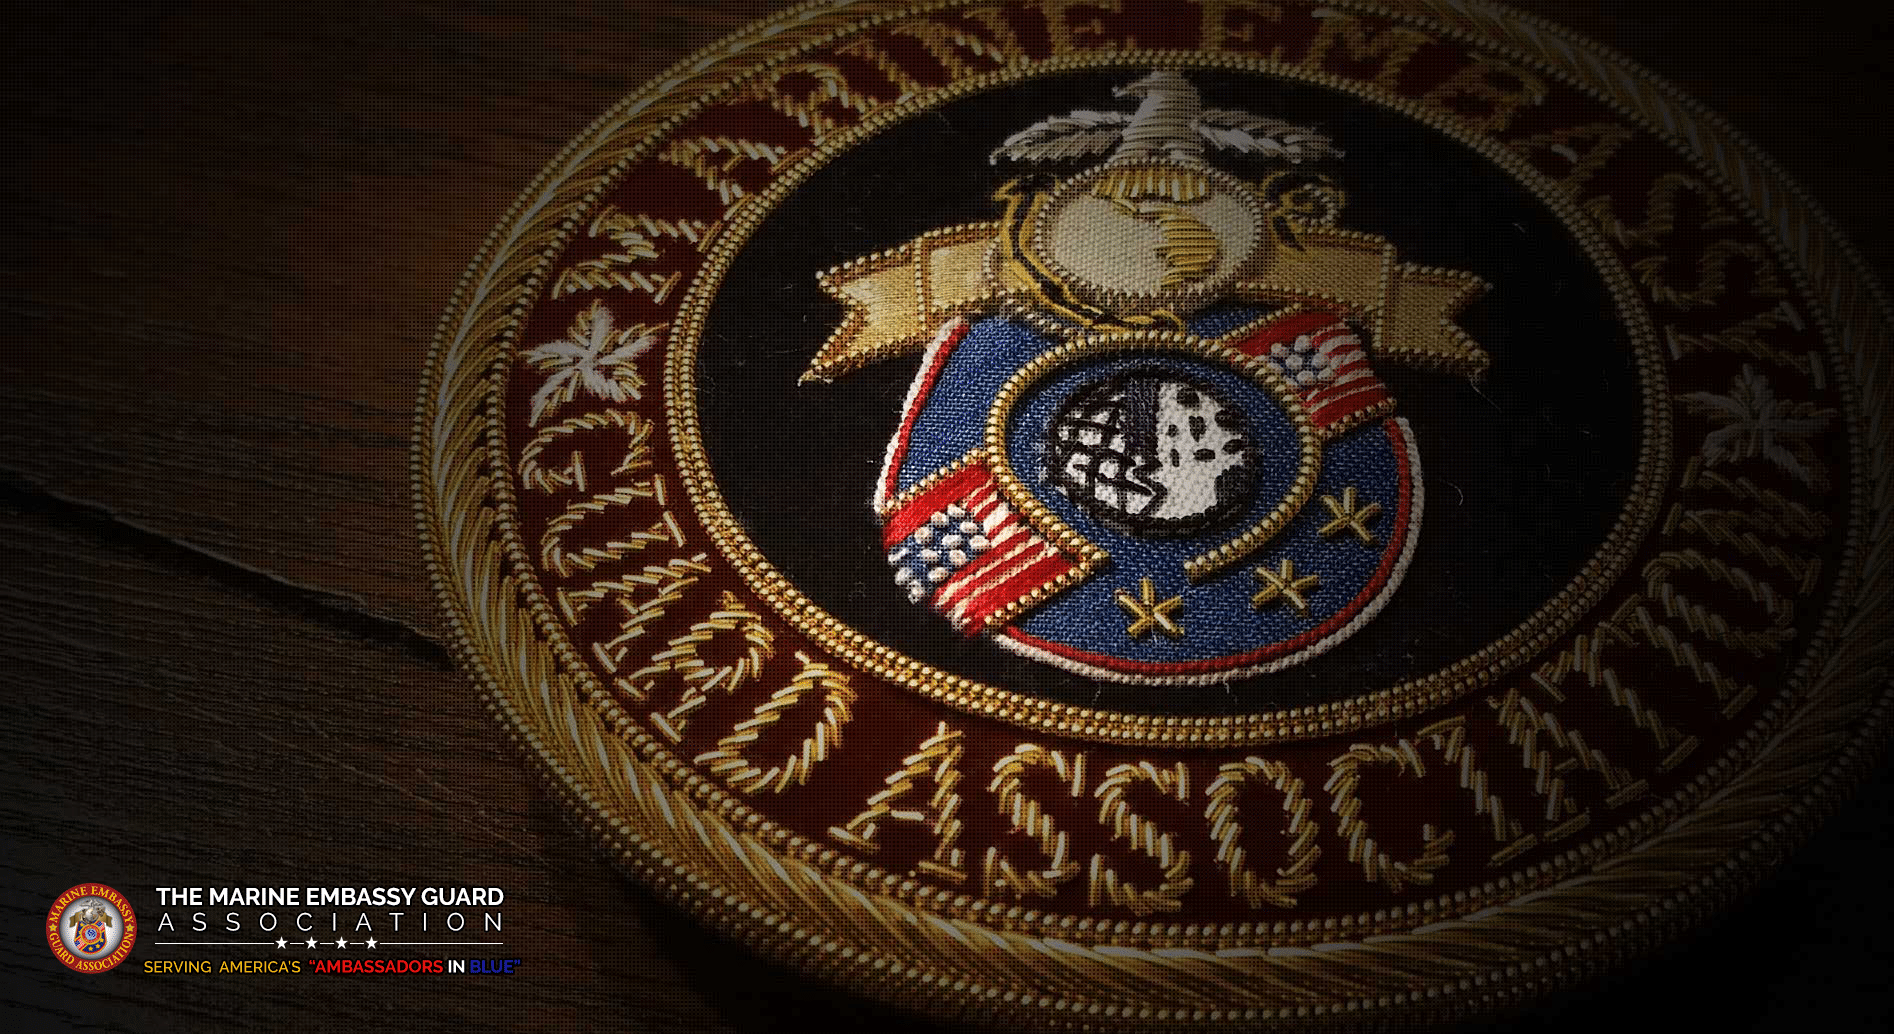 DOWNLOADS > WALLPAPERS. Marine Embassy Guard Association